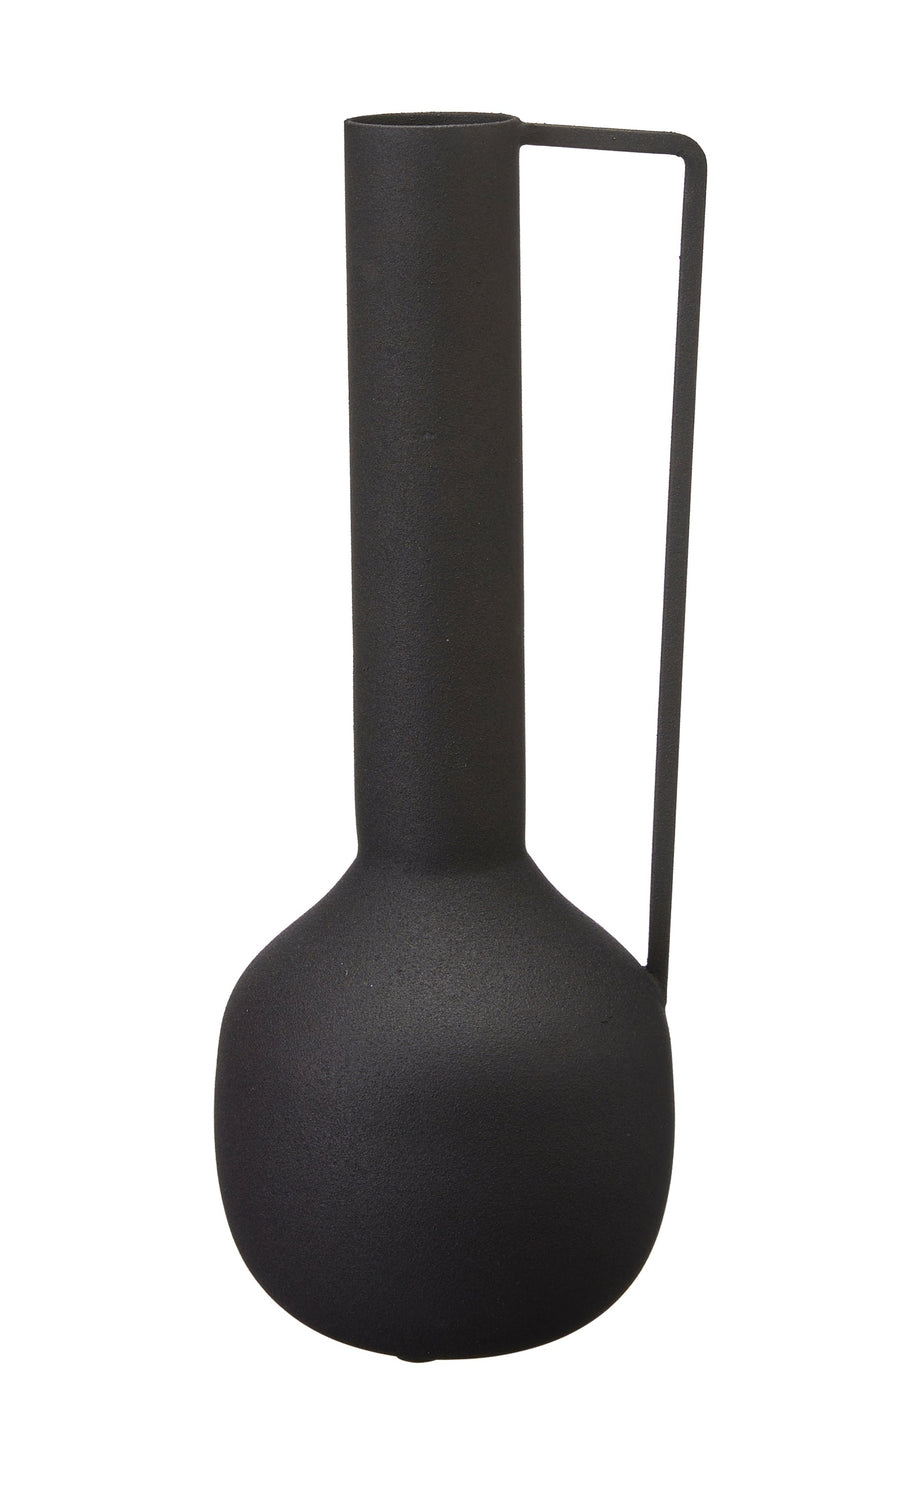 Metallvase Akhila H30cm, schwarz